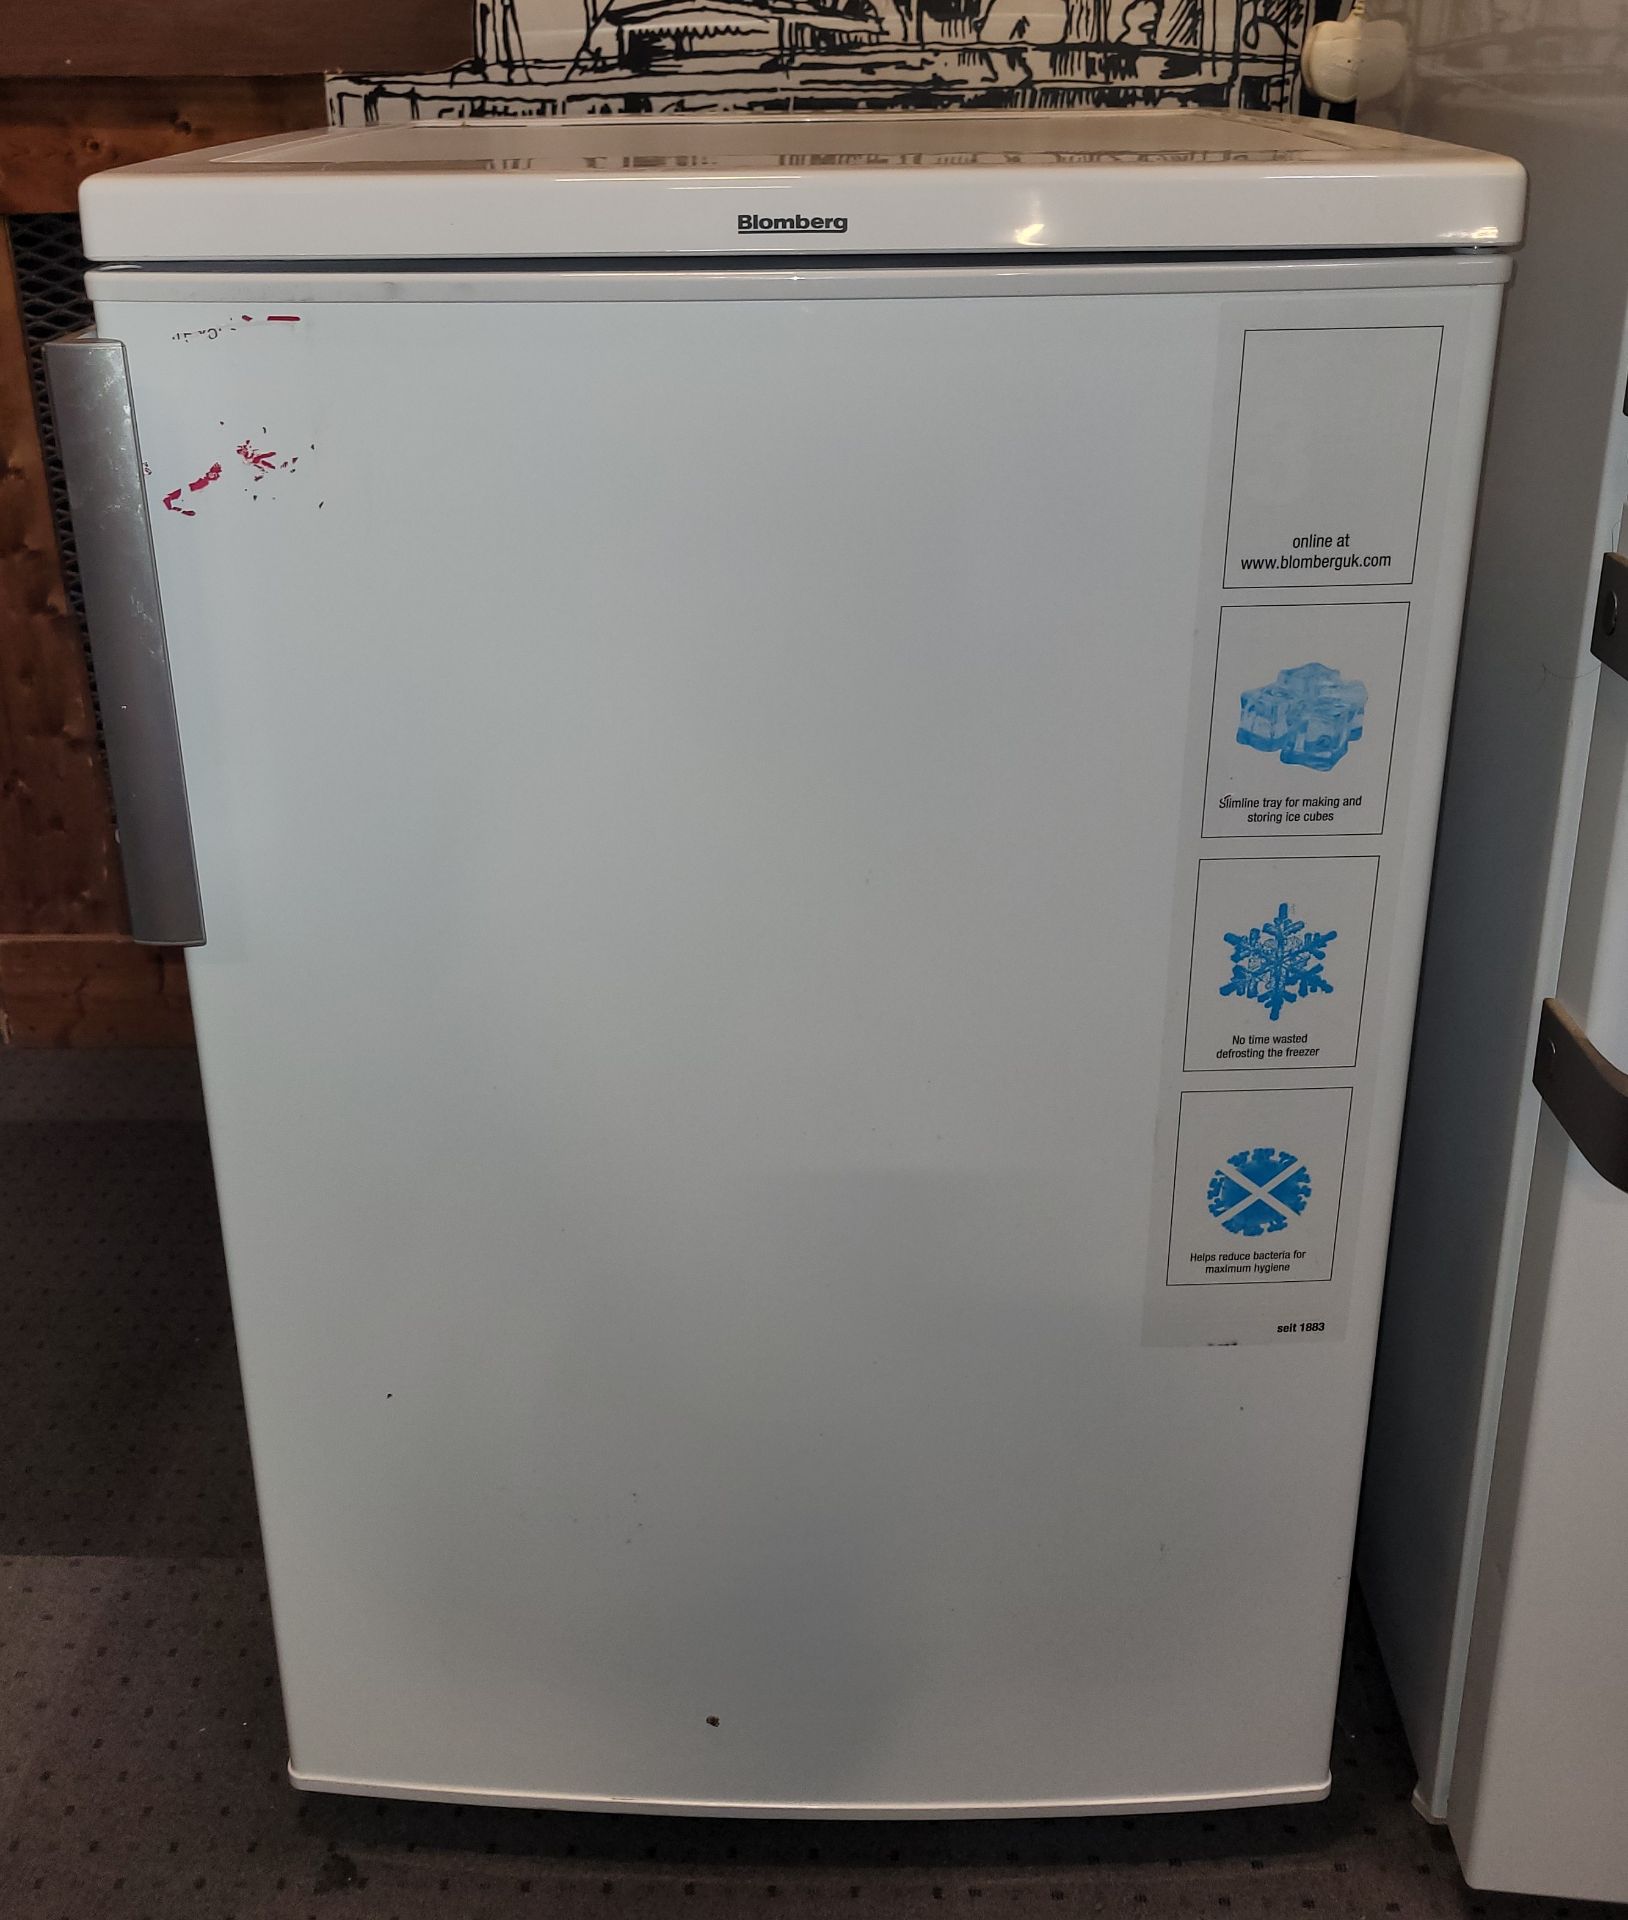 A Bloomberg undercounter freezer. W54, D60, H84cm.